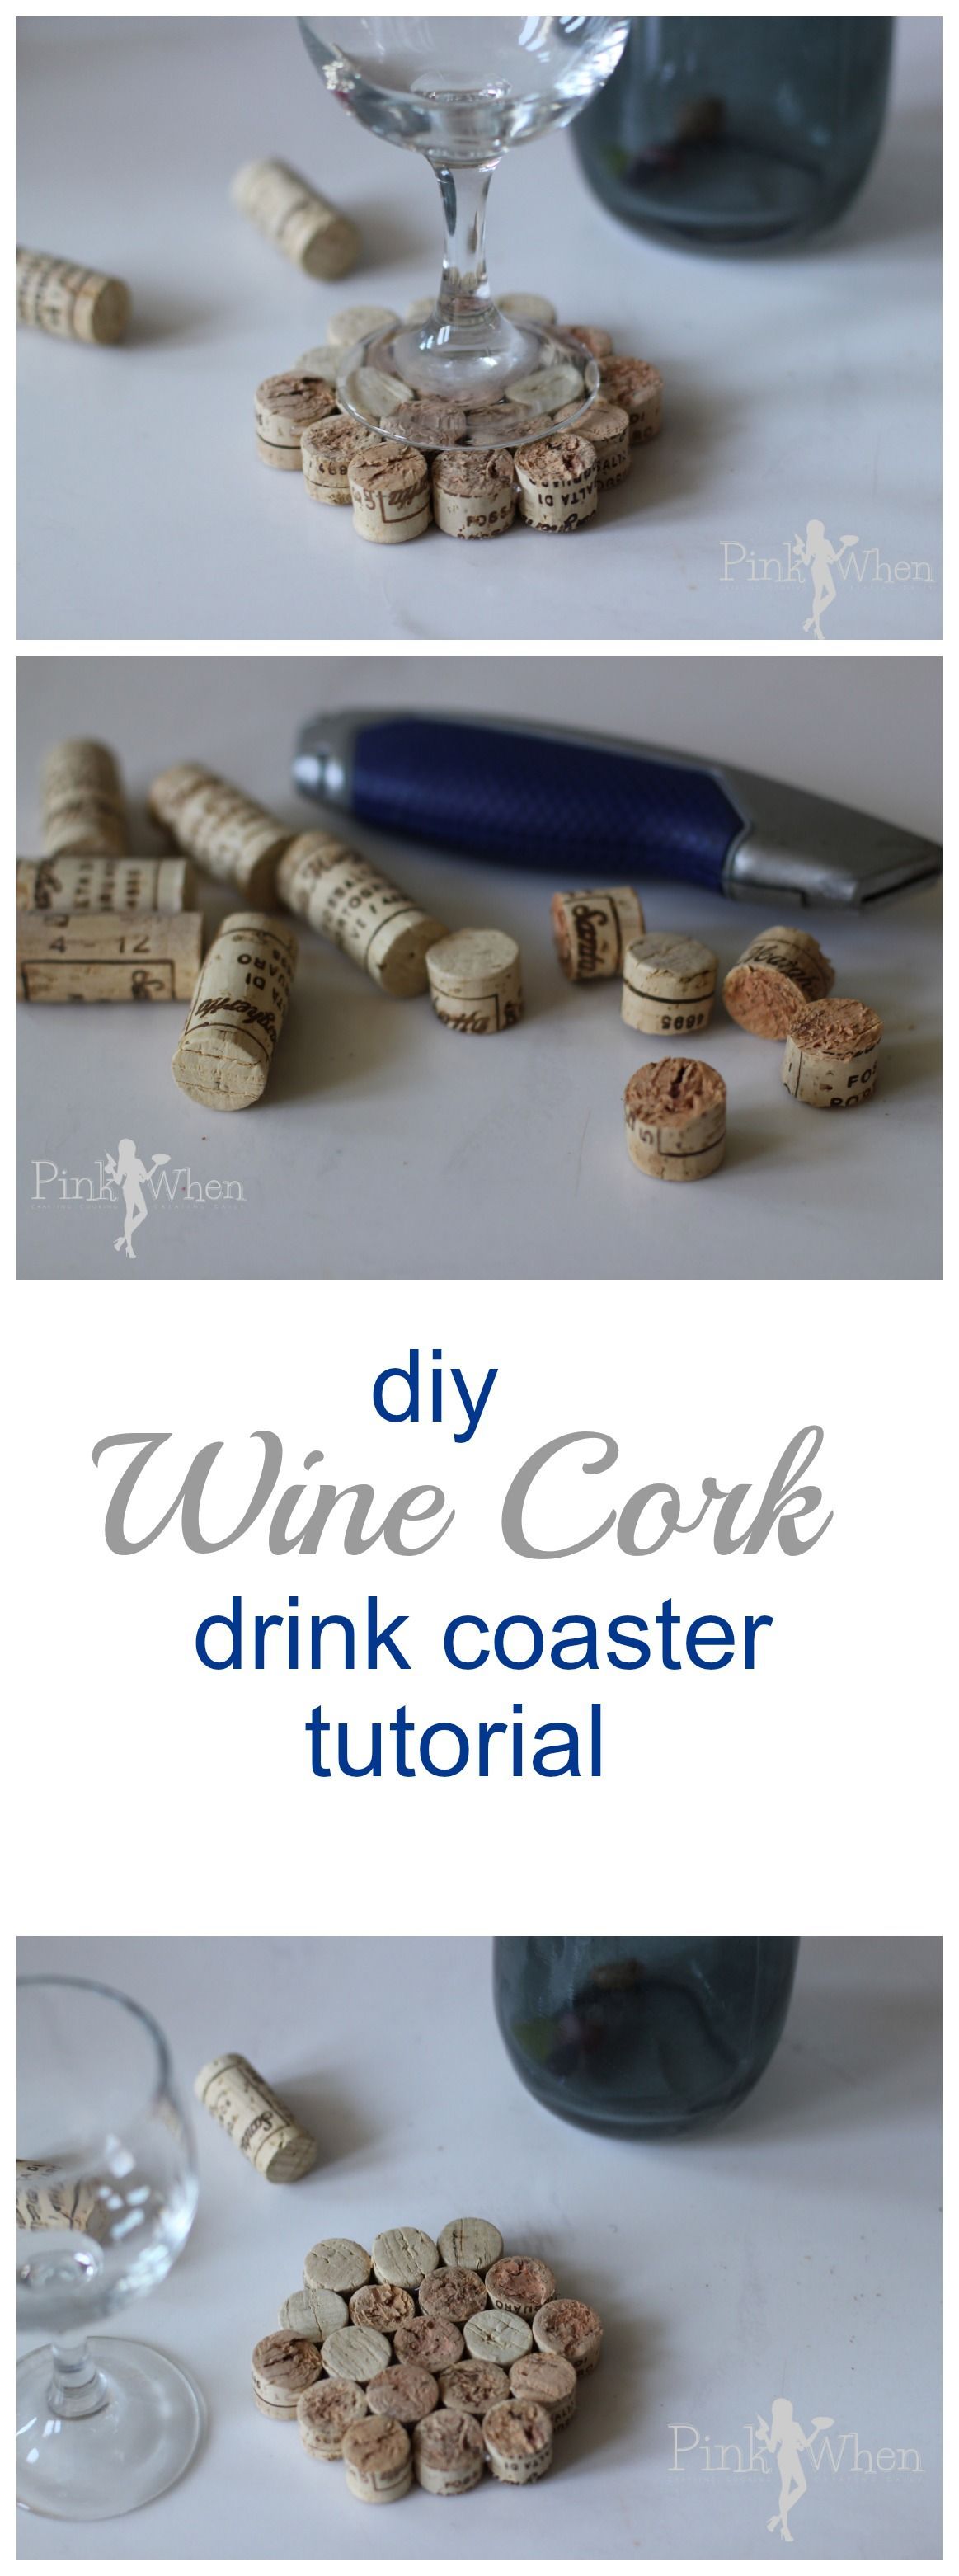 24 cork crafts table ideas